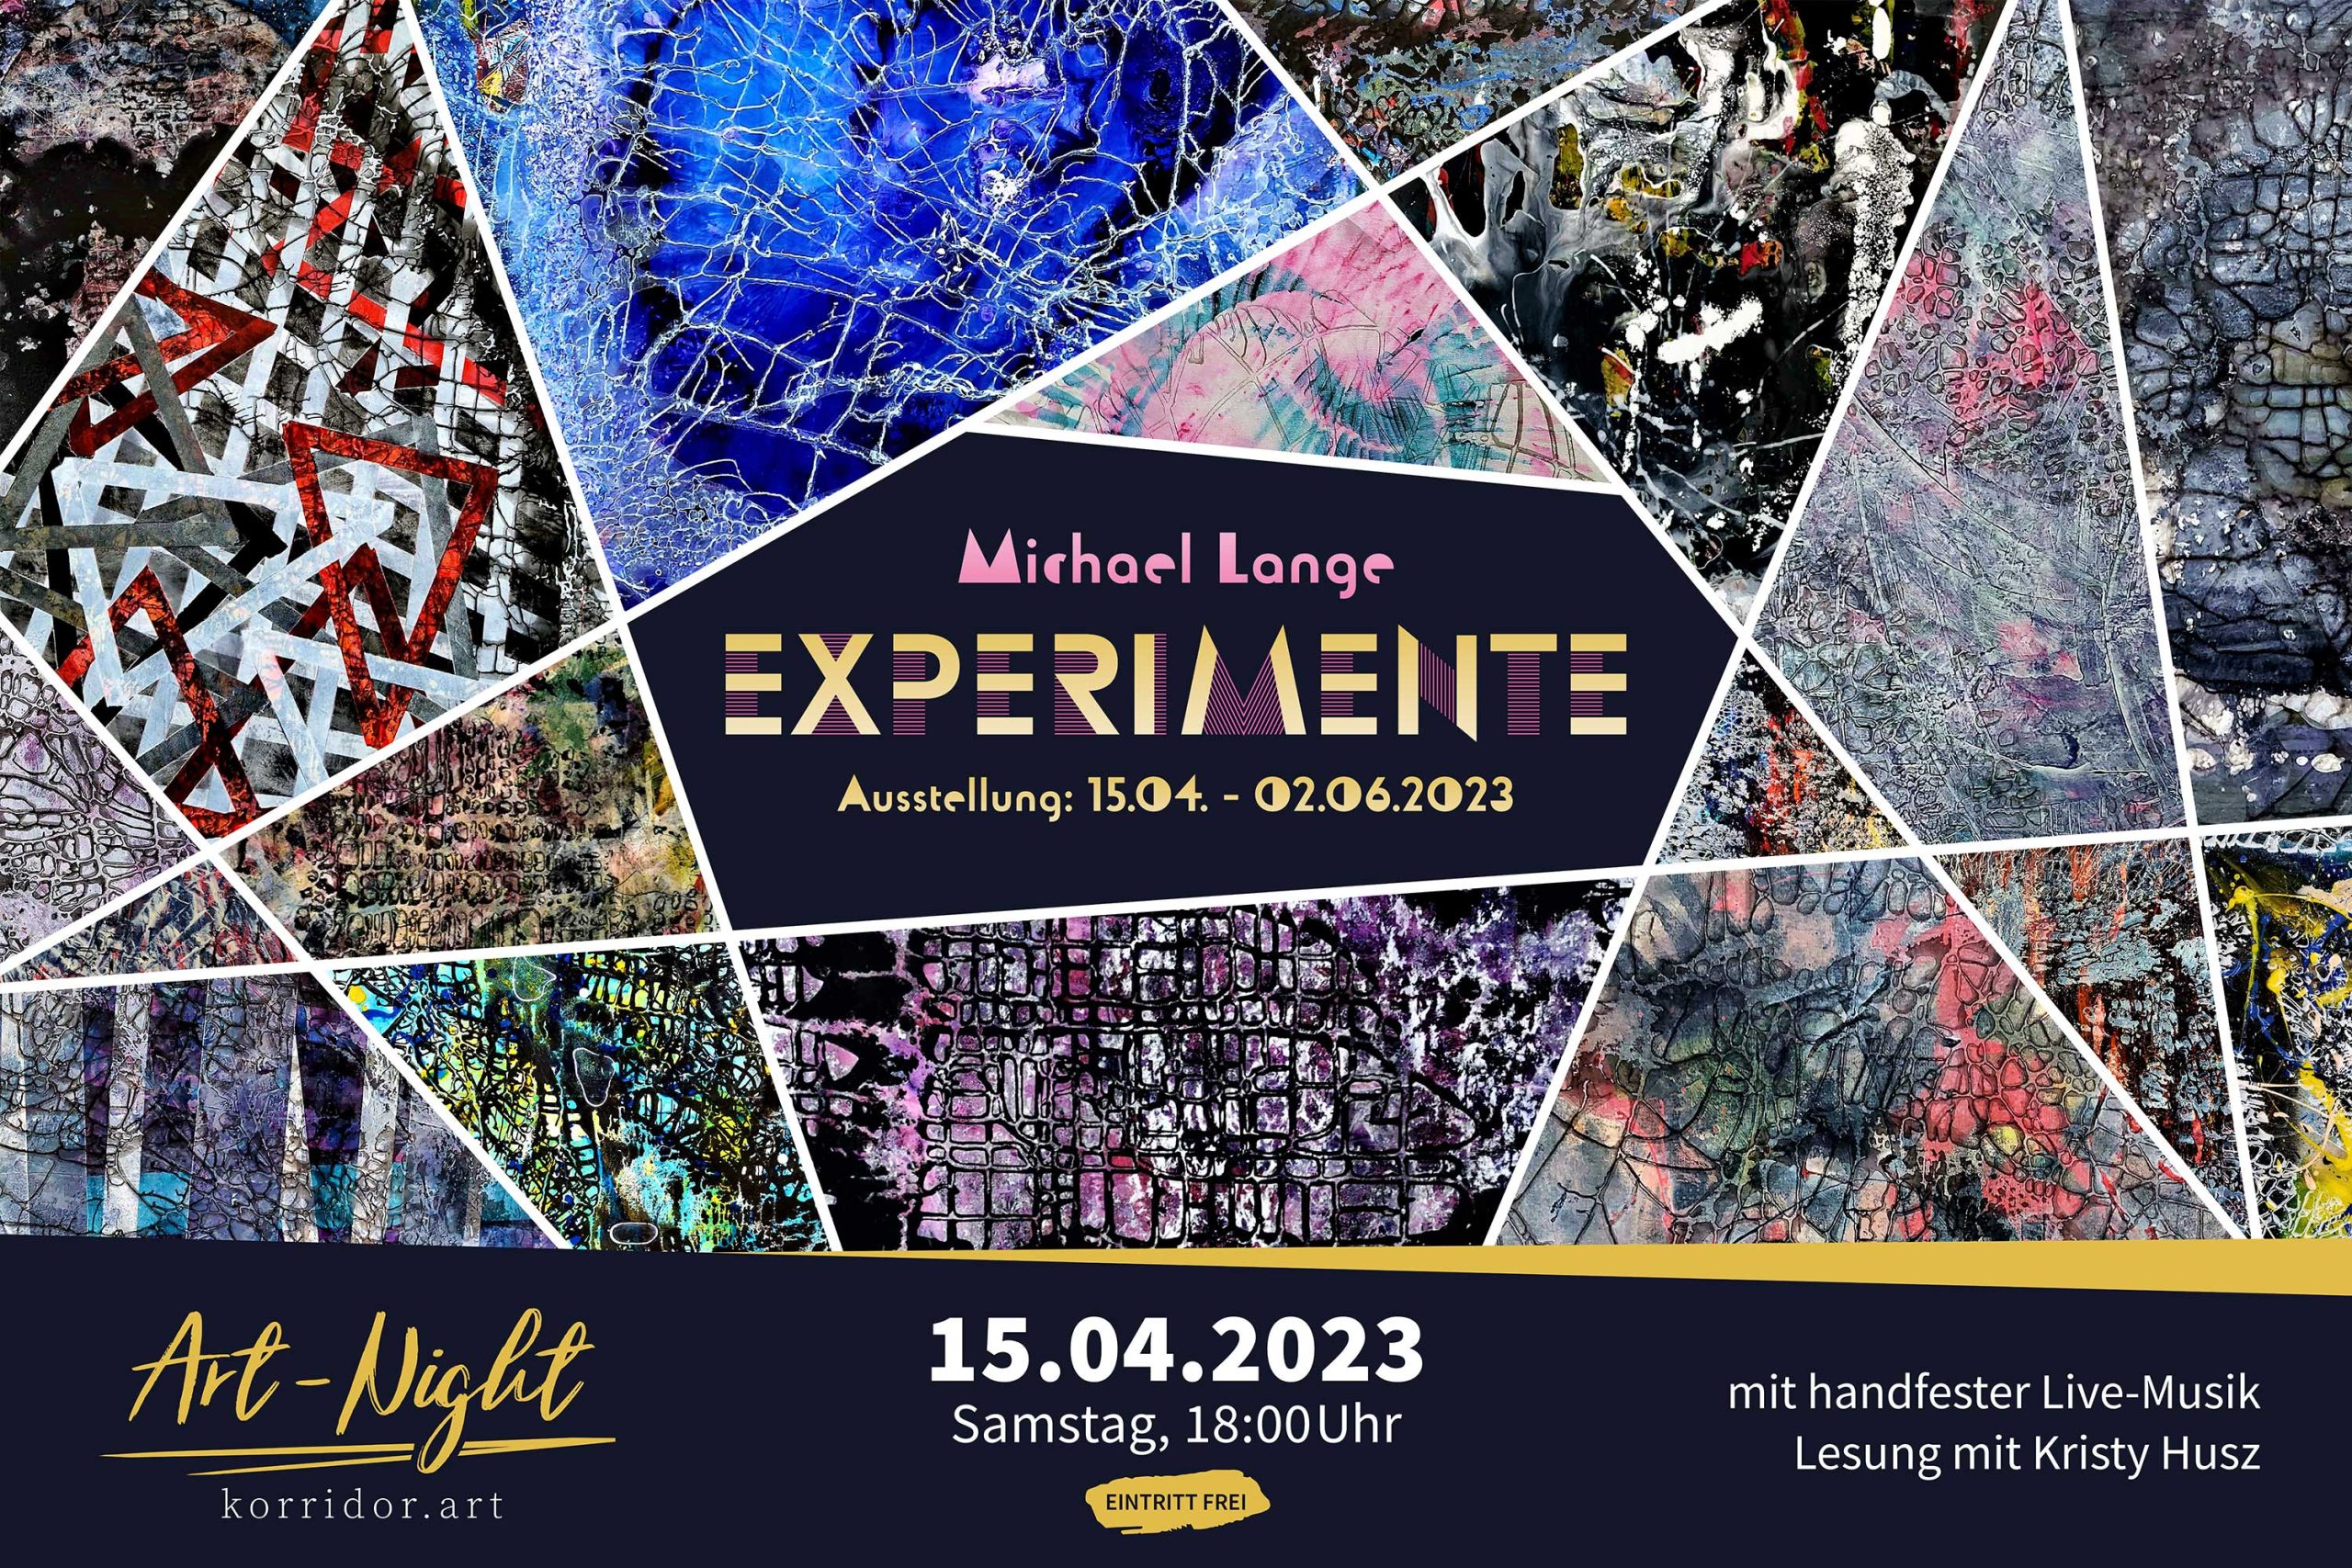 Art-Night „Experimente“ | Michael Lange